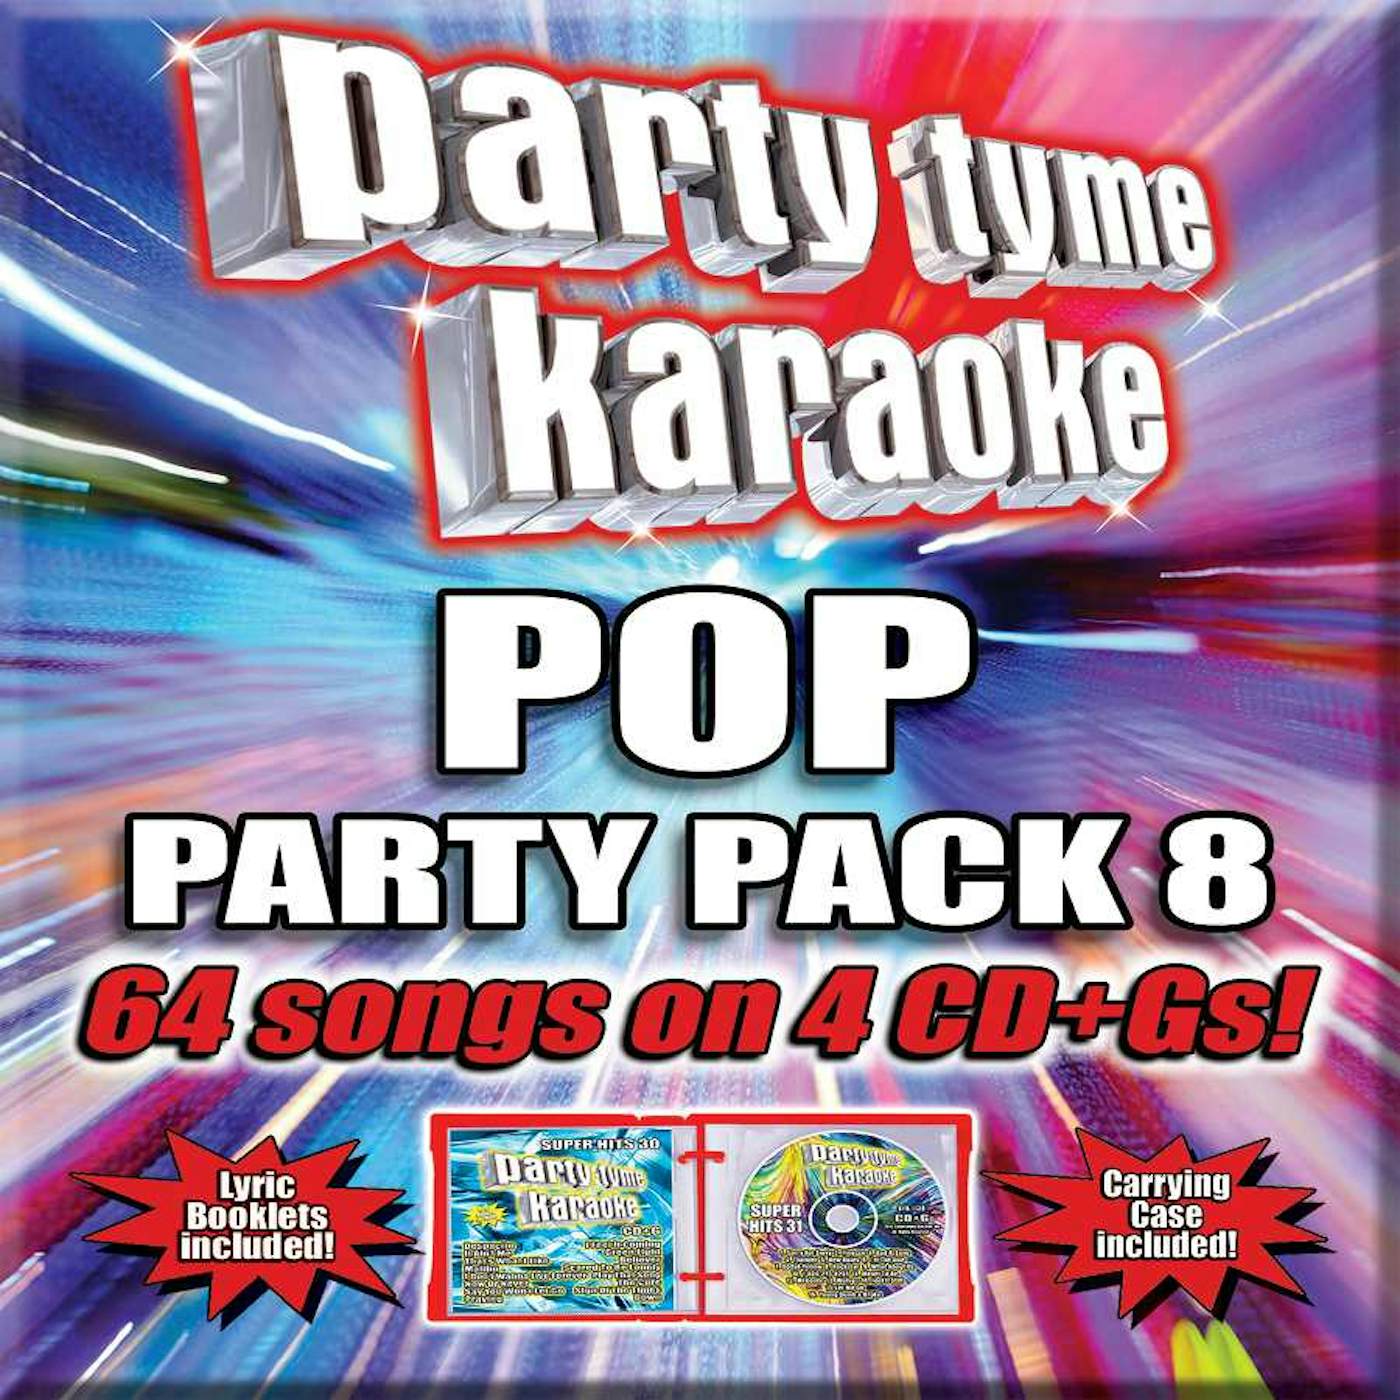 Zoom Karaoke - Rock 'N' Roll Superhits Box Set - 60 Songs - Triple CD+G  [CD] NEW